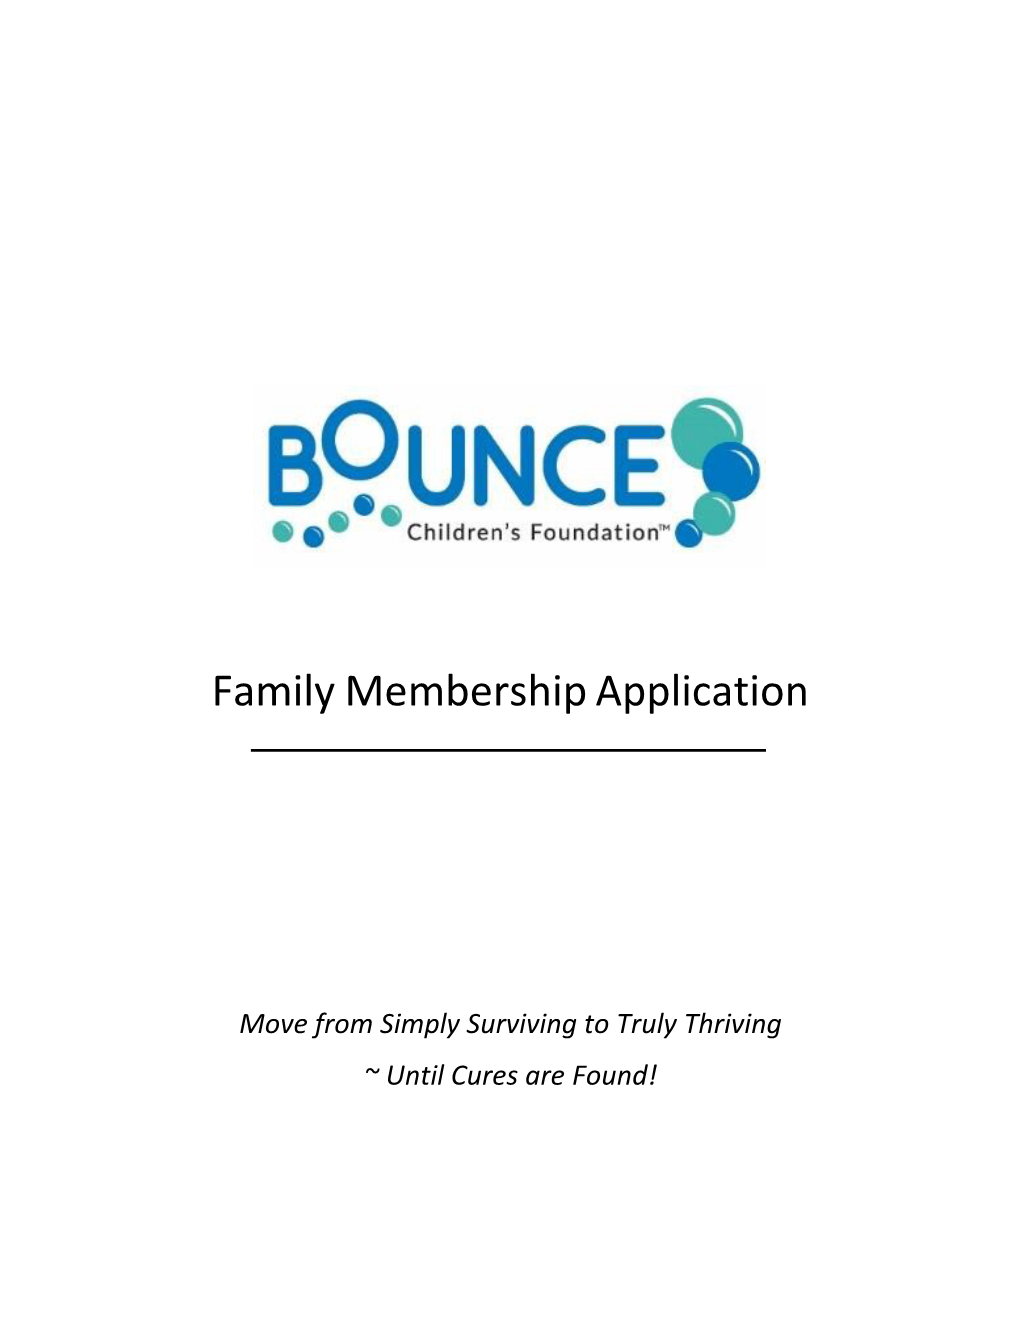 Bounce Family Membership Application